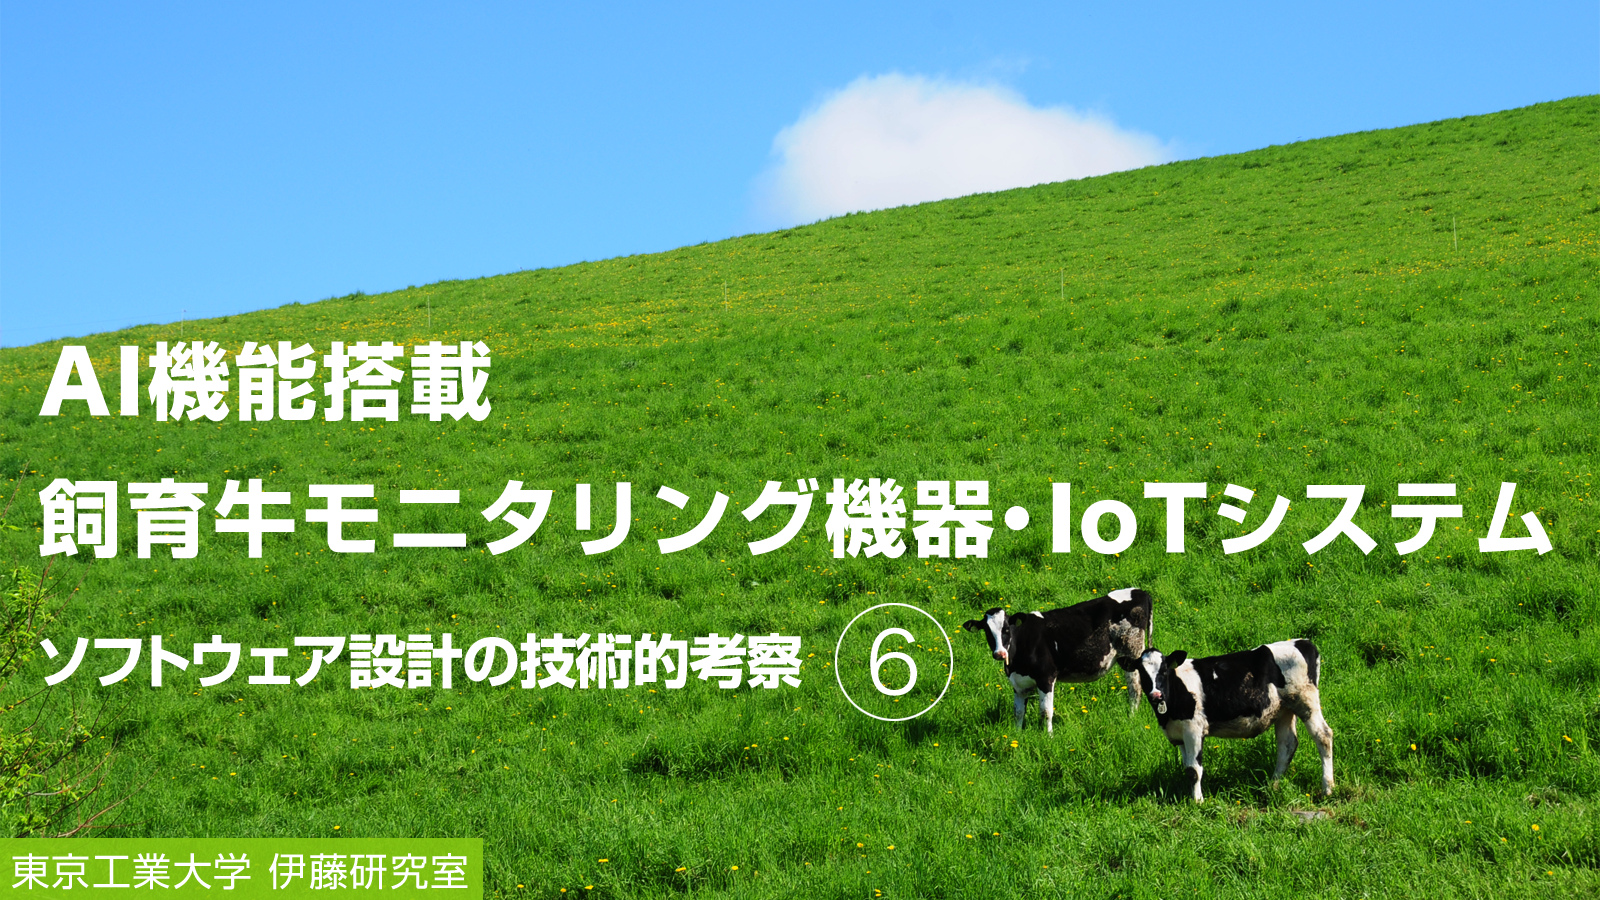 AI機能搭載 飼育牛モニタリング機器・IoTシステム 本研究のソフトウェア設計の技術的考察（6）
～東京工業大学 機械学習研究会でのインプット活動～